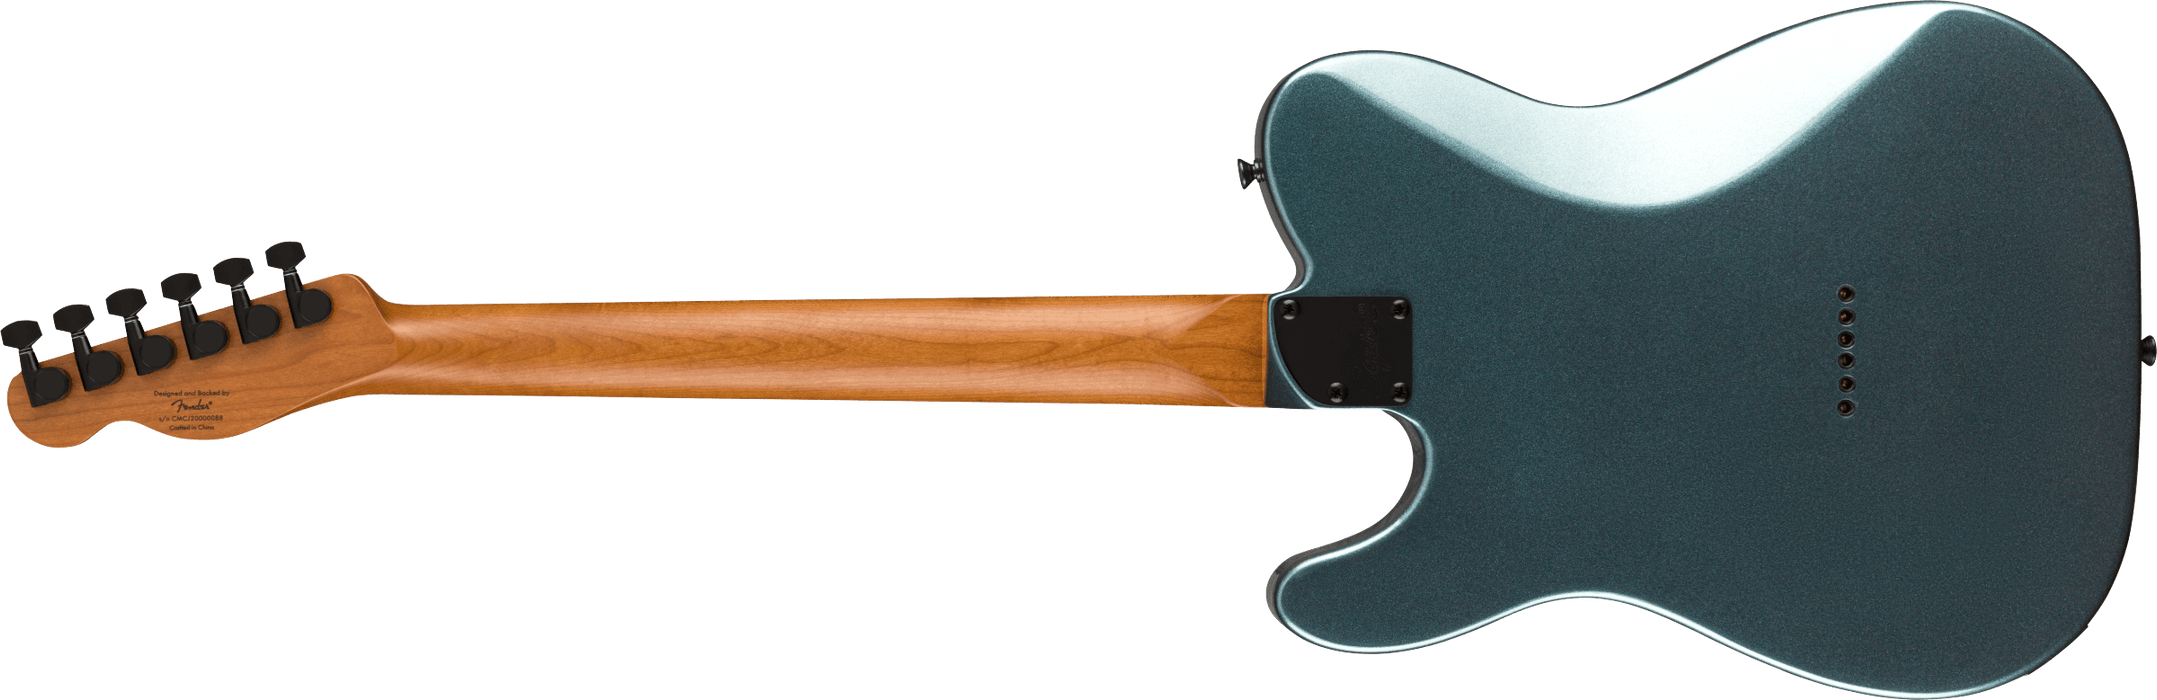 Squier Contemporary Telecaster RH Roasted Maple Fingerboard Gunmetal Metallic Electric Guitar